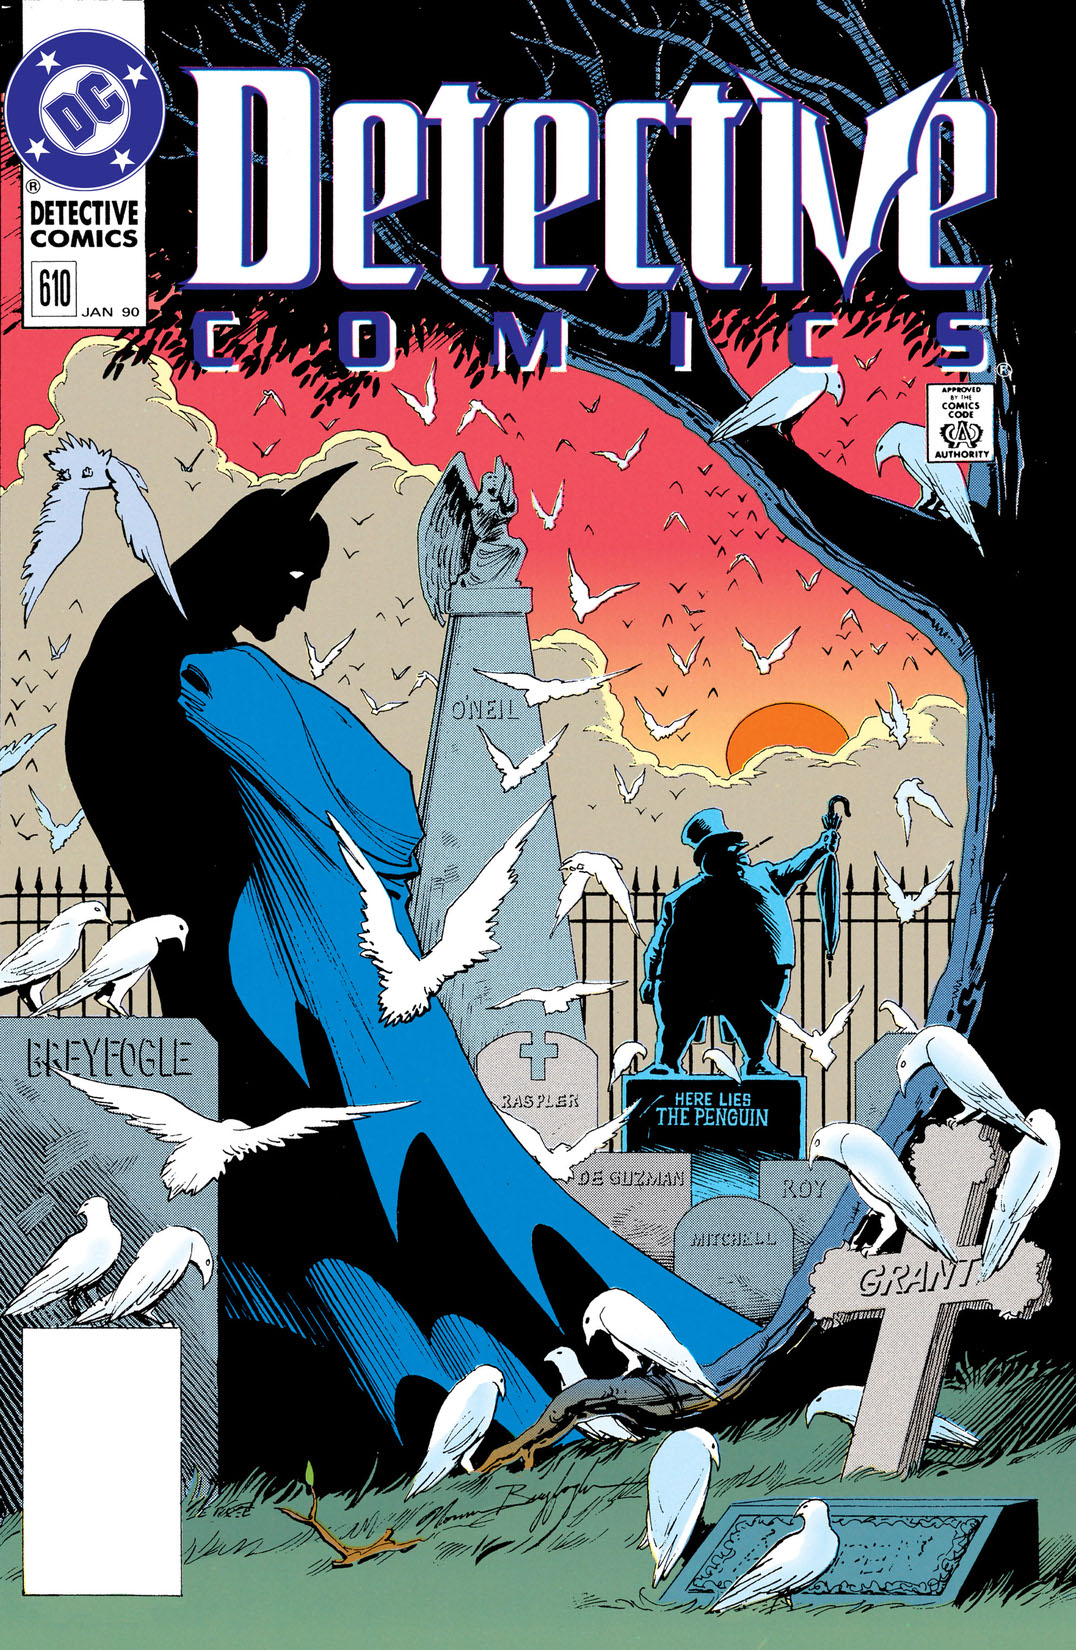 Detective Comics (1937-) #610 preview images